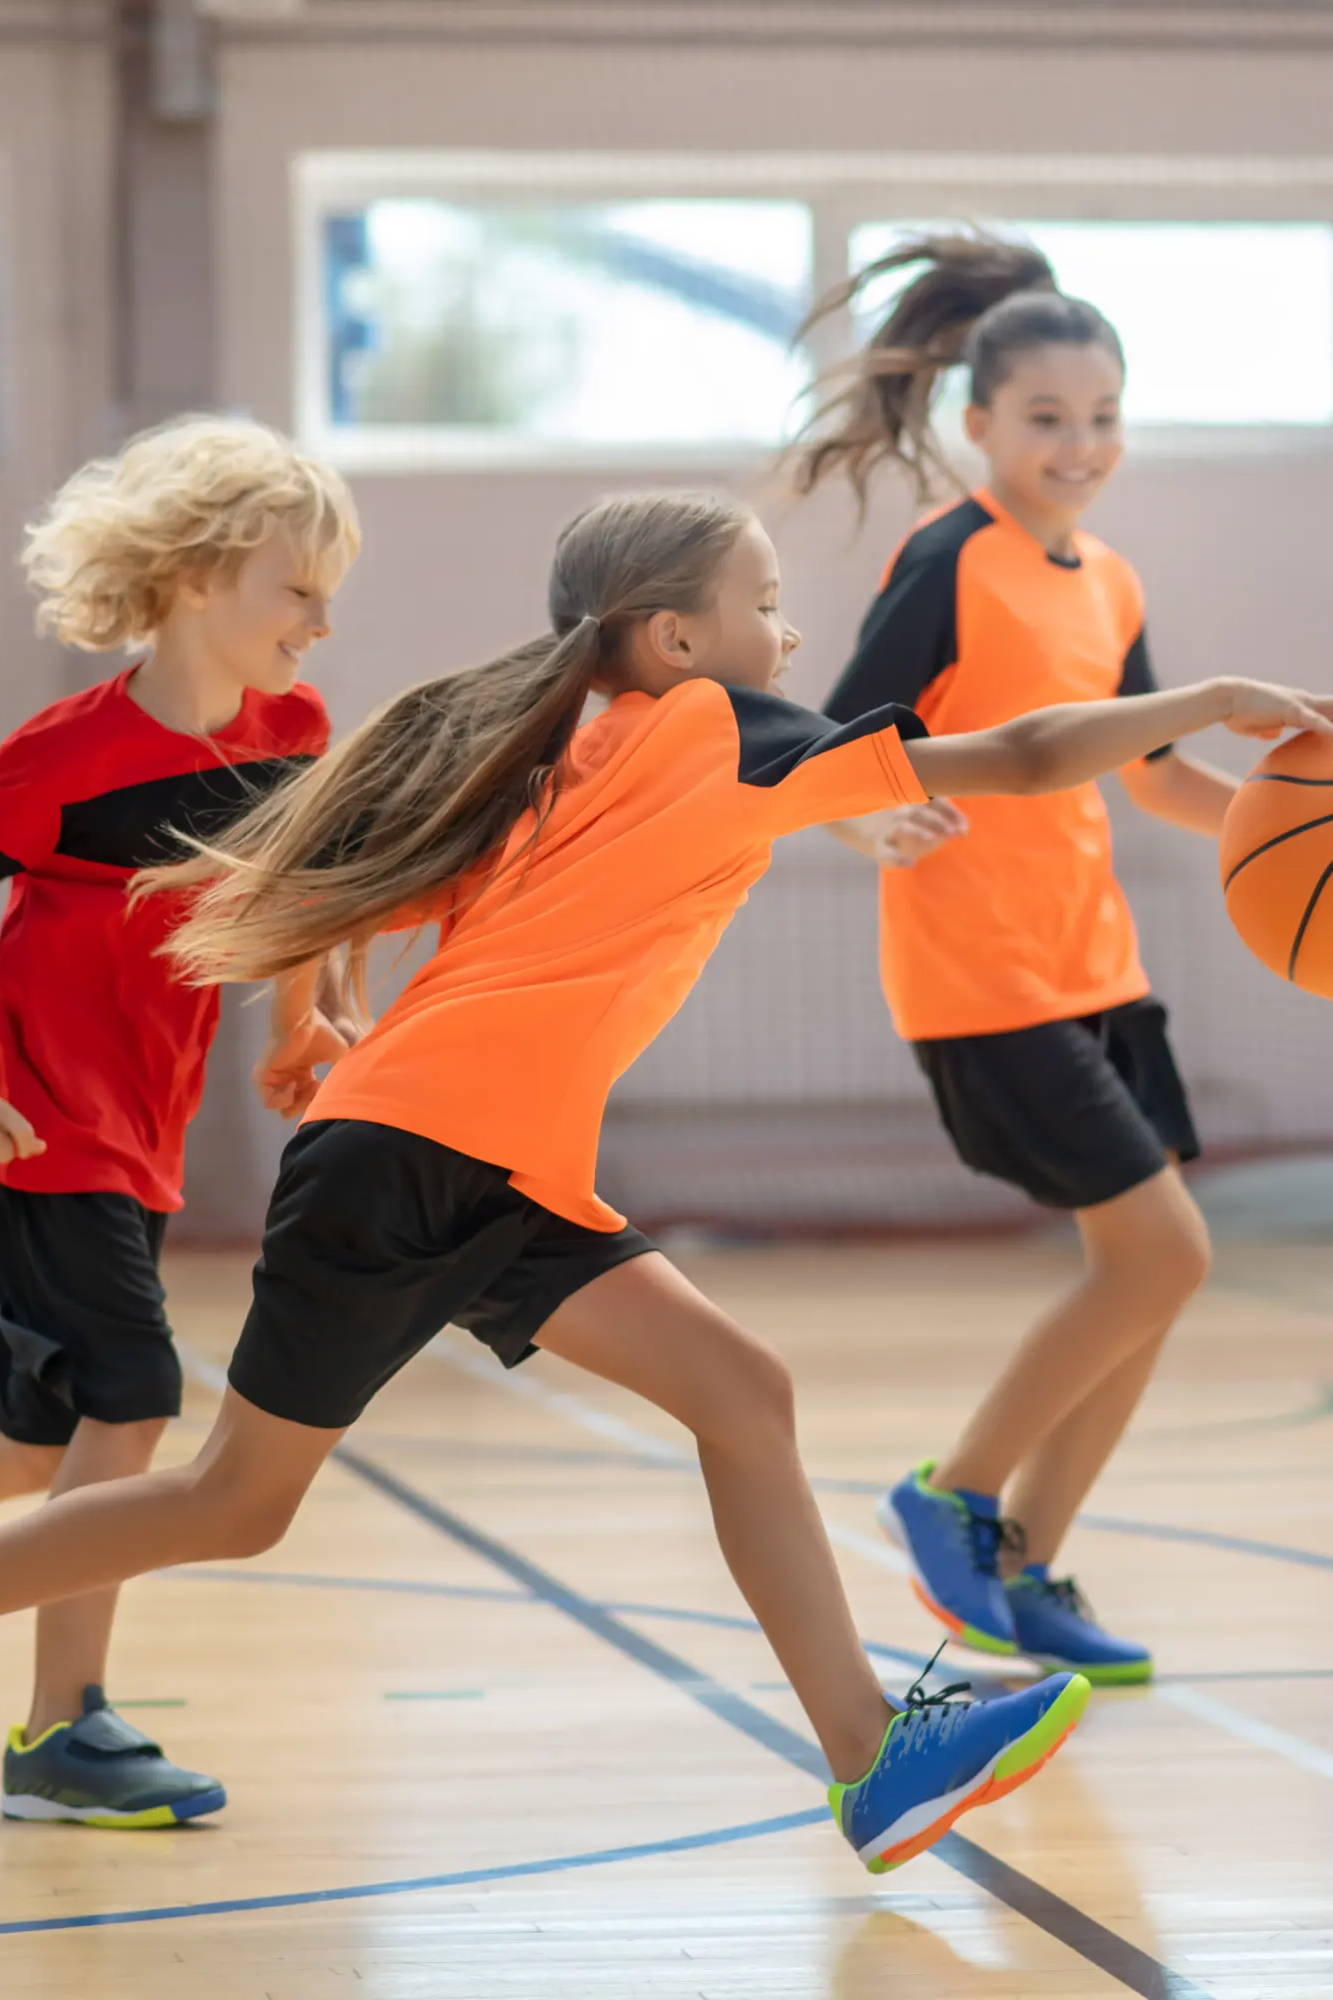 Kids playing basketball in gymnasium